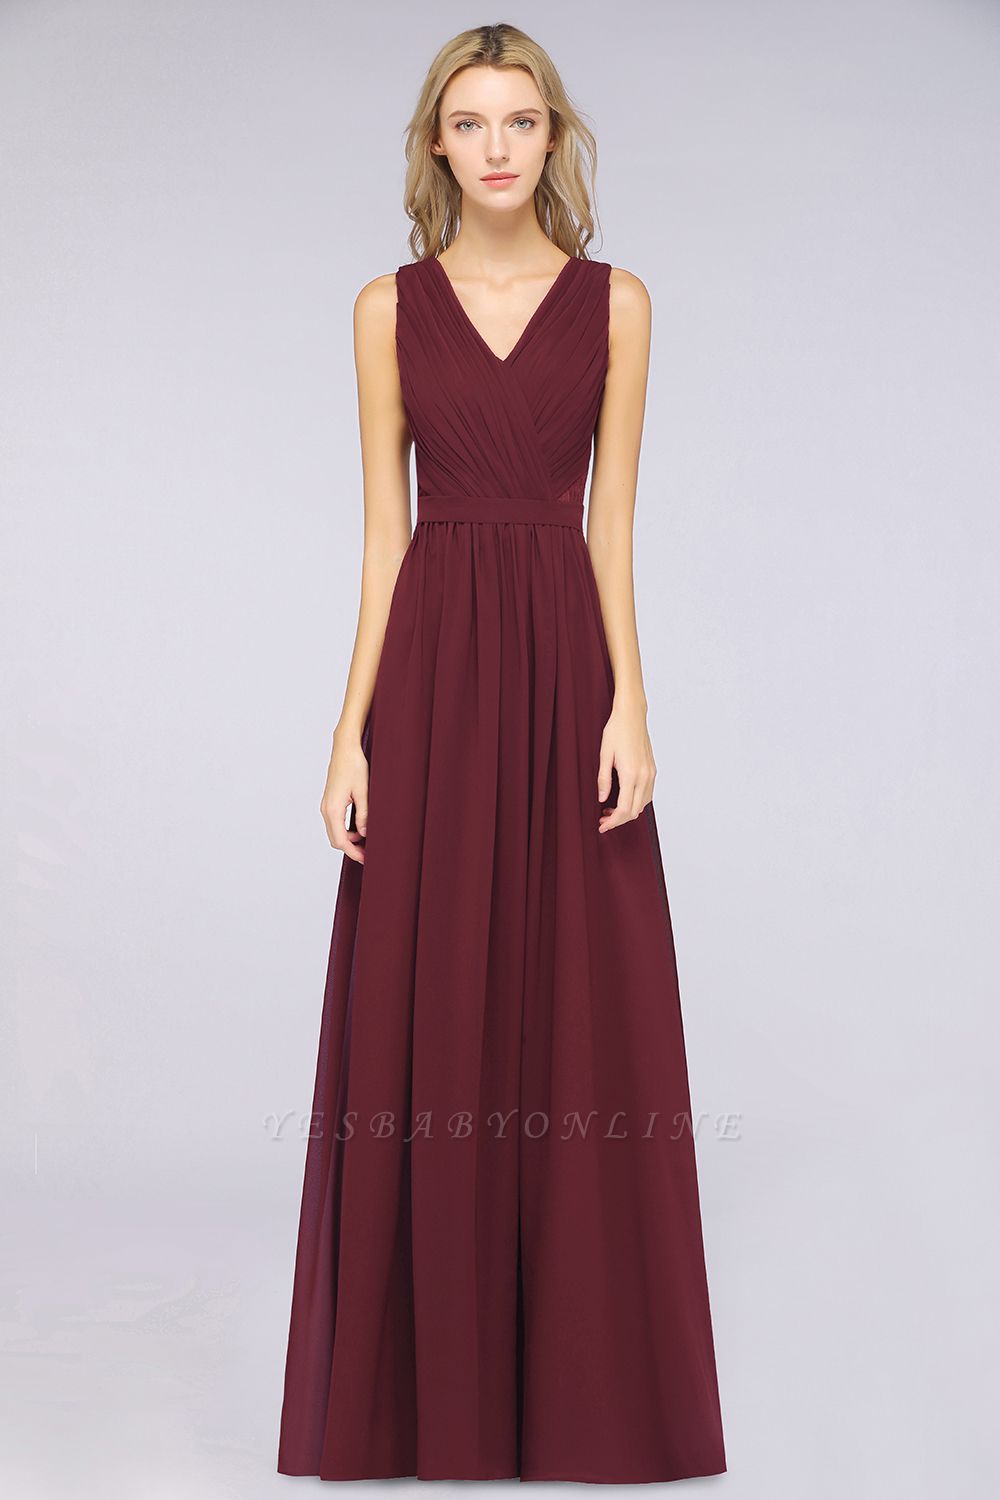 A-Line V-Neck Sleeveless Floor-Length  Lace Bridesmaid Dress with Ruffles